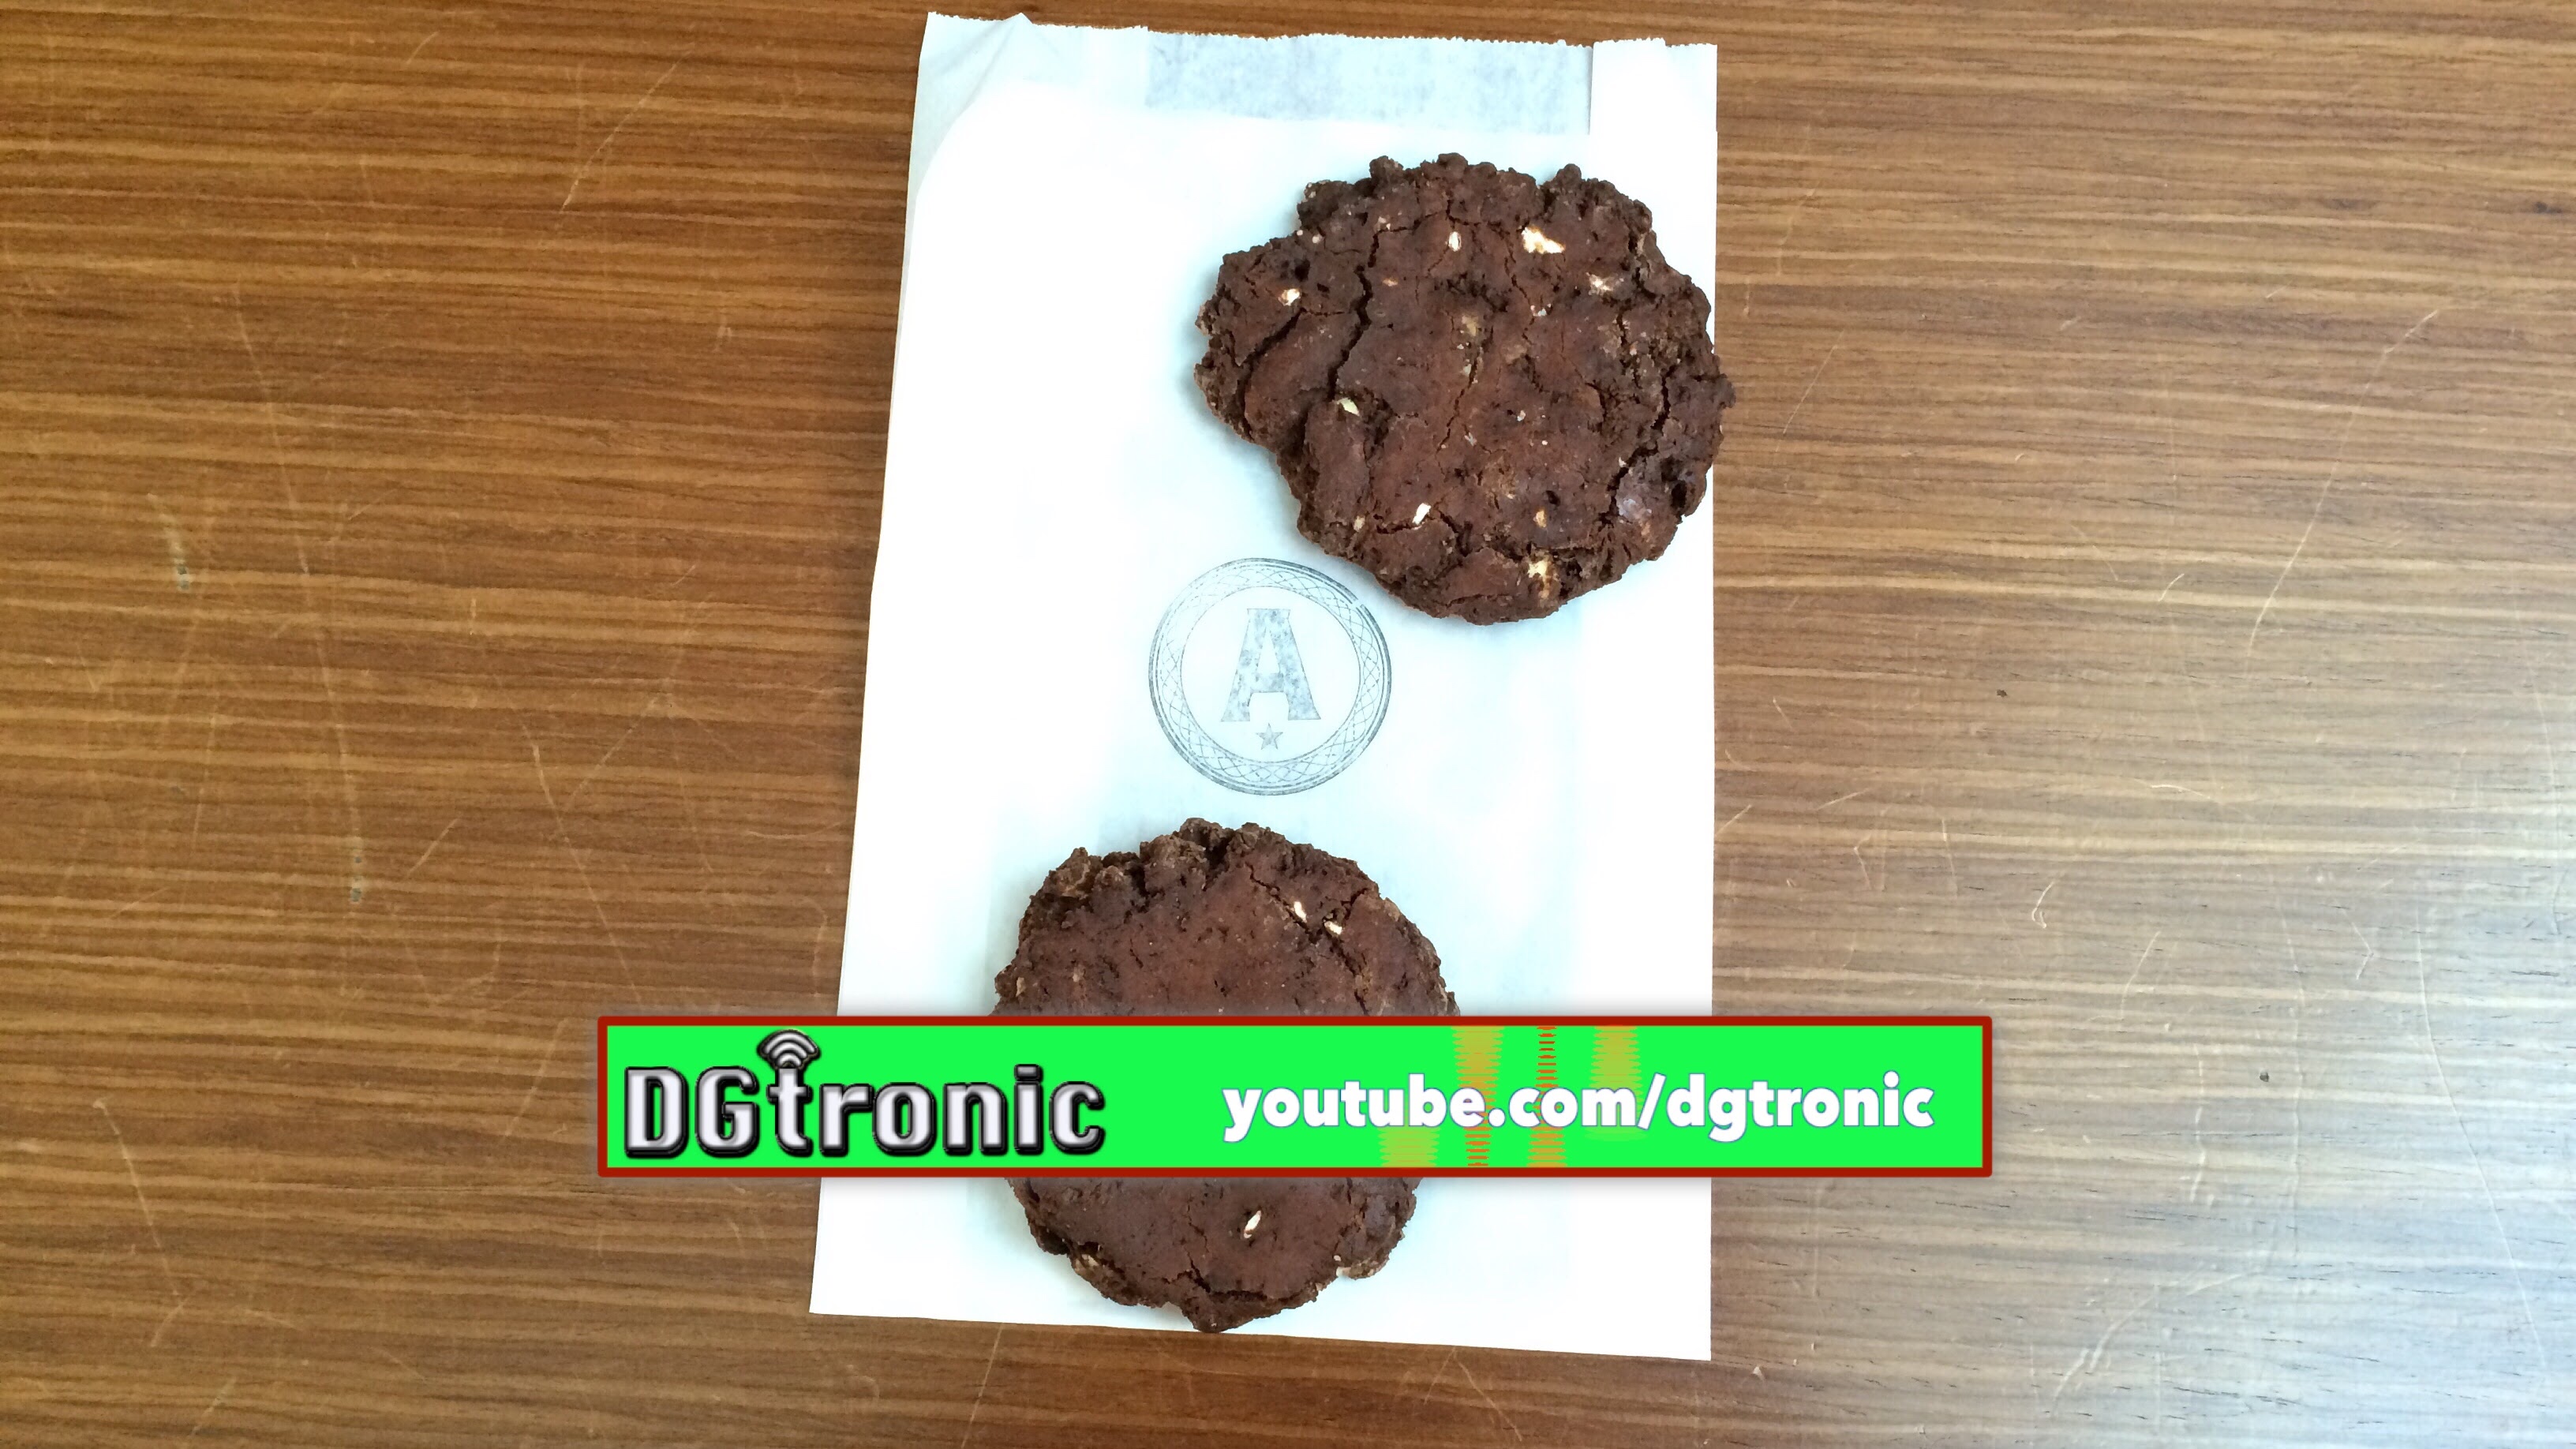 chocolate - DGtronic youtube.comdgtronic